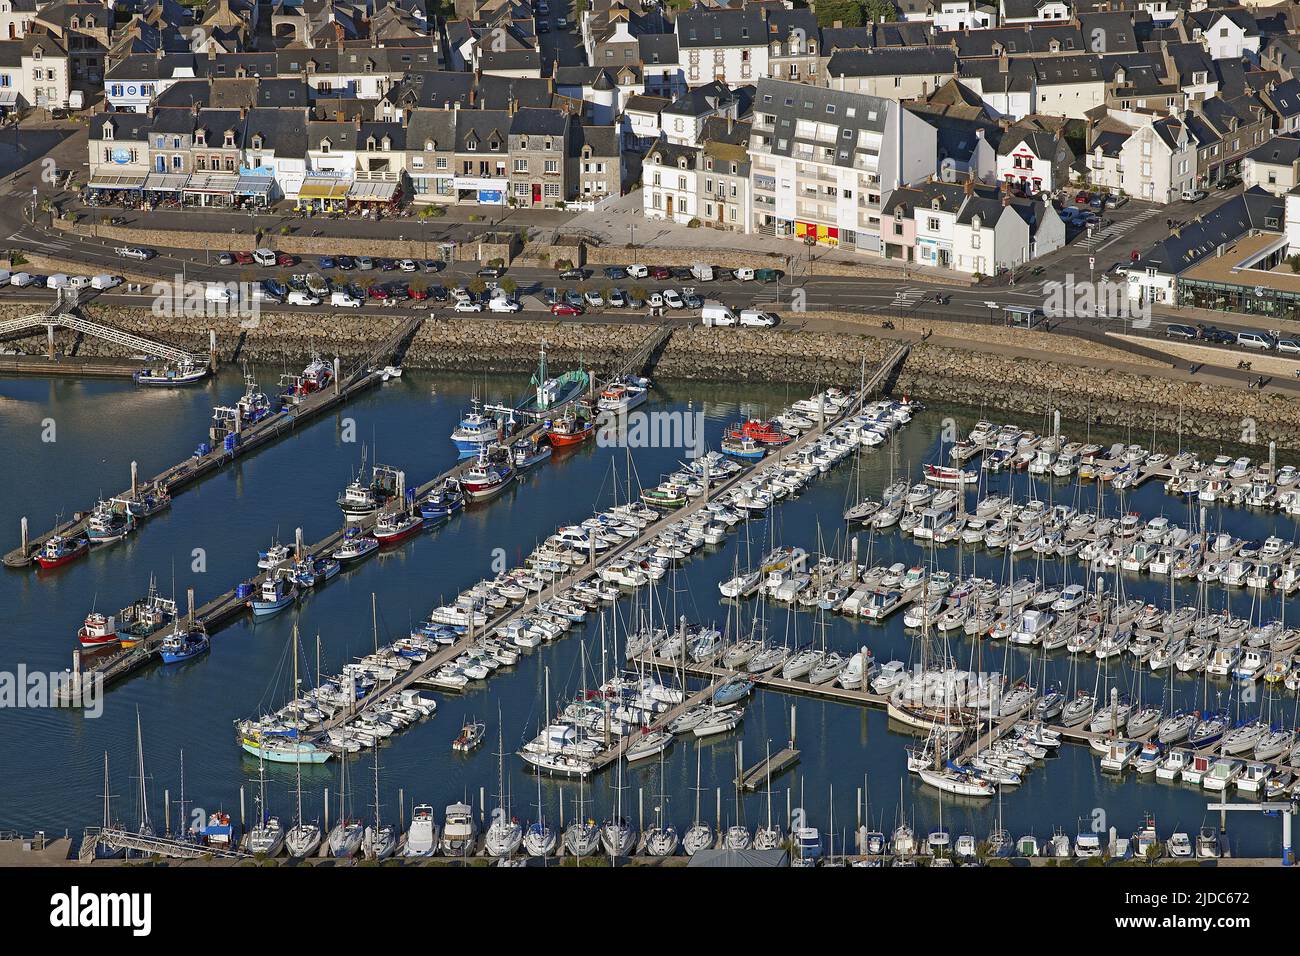 France, Loire-Atlantique, La Turballe, the ports, (aerial view Stock Photo  - Alamy